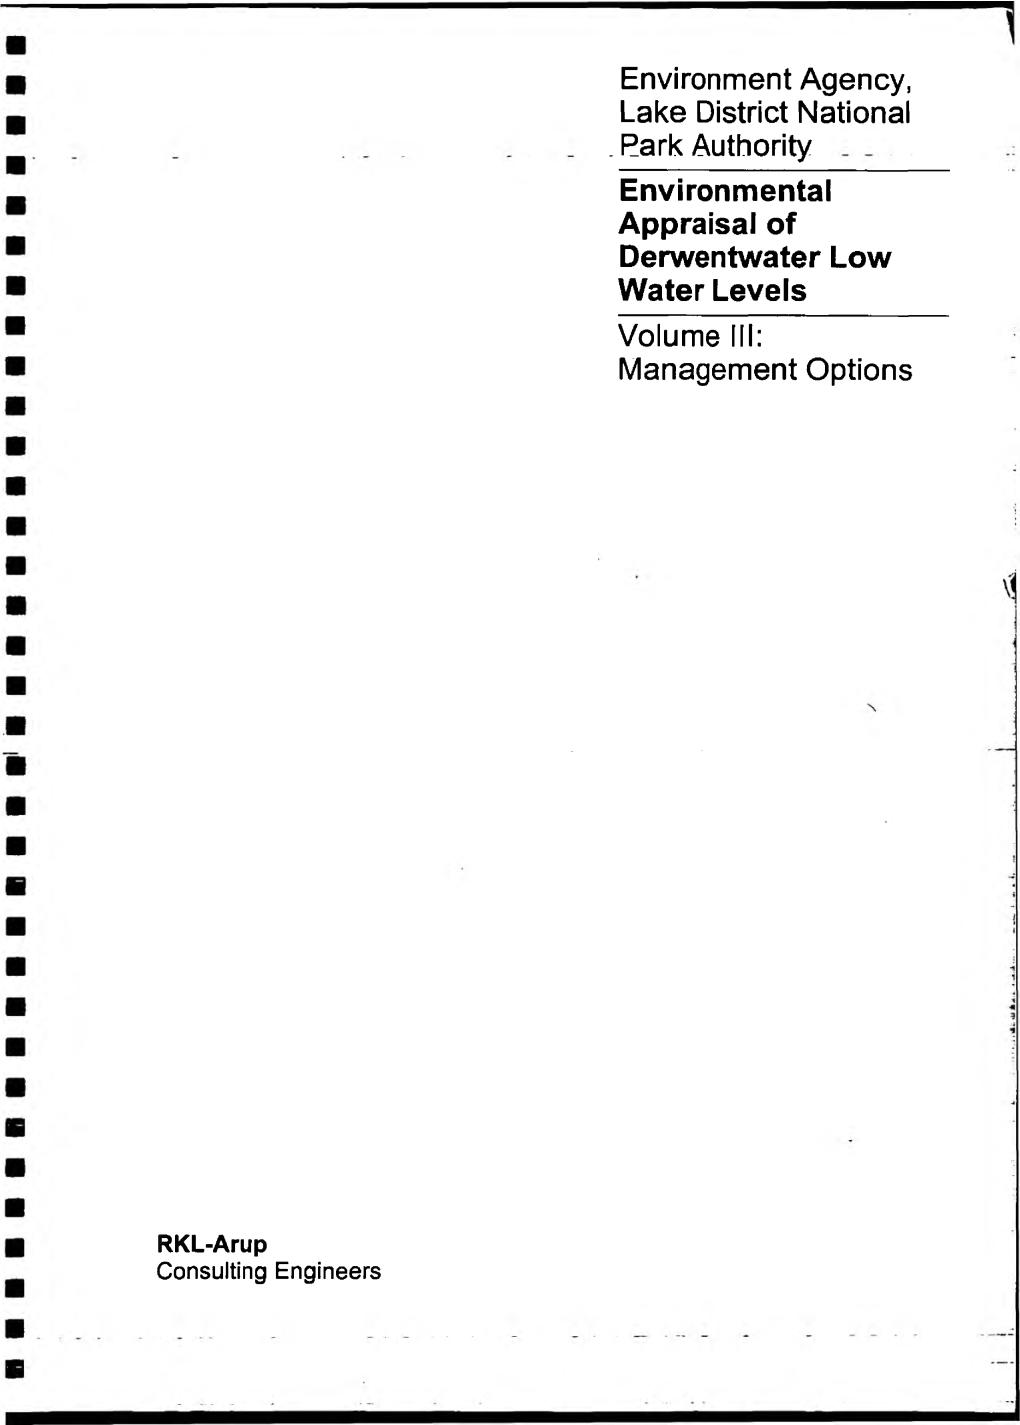 Environmental Appraisal of Derwentwater Low Water Levels Volume III: Management Options